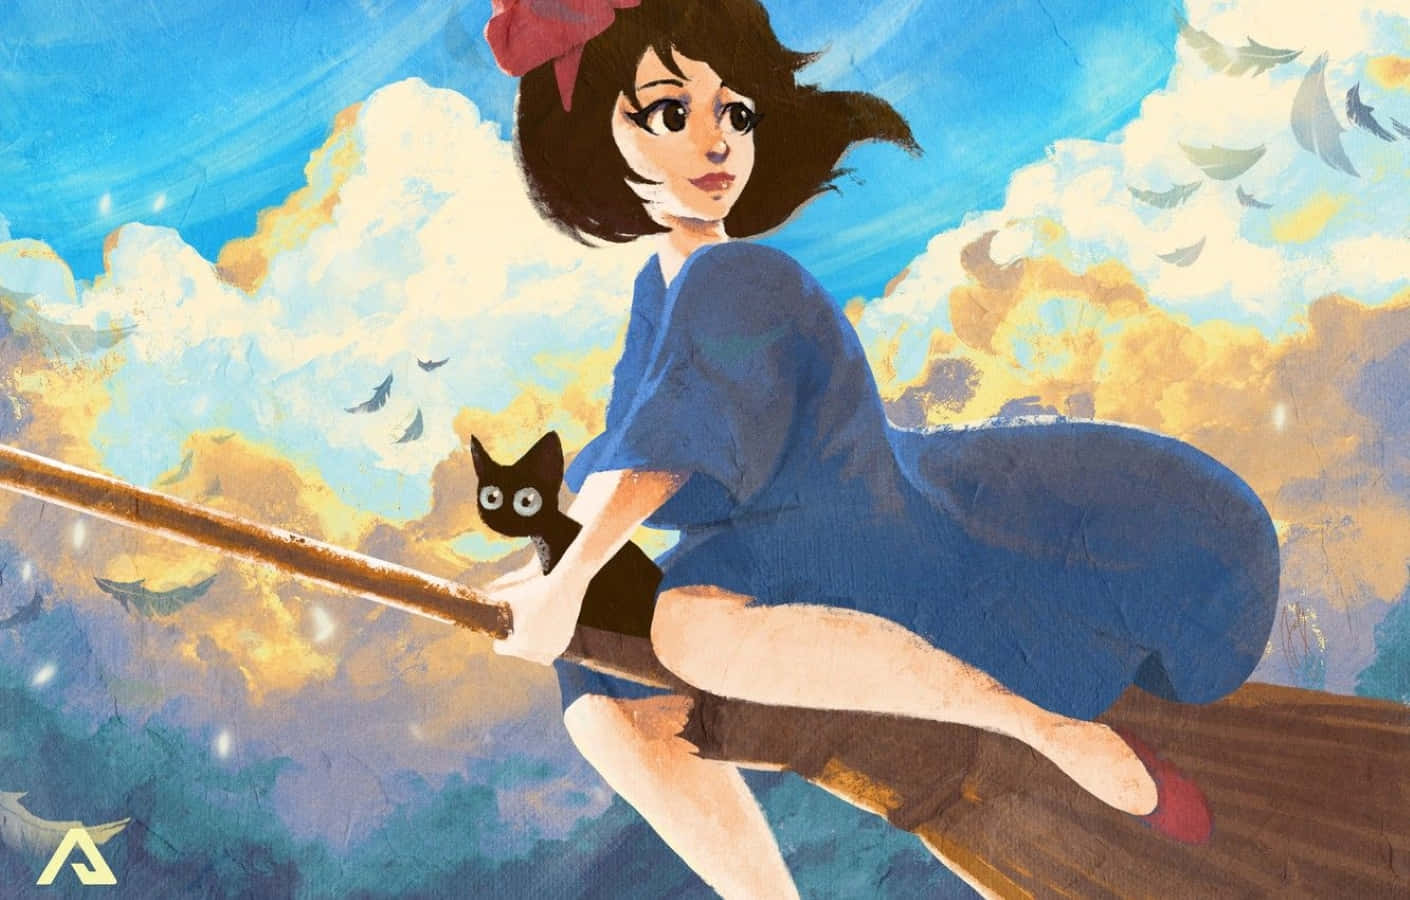 "Enchanting Image of Jiji, the Black Cat" Wallpaper